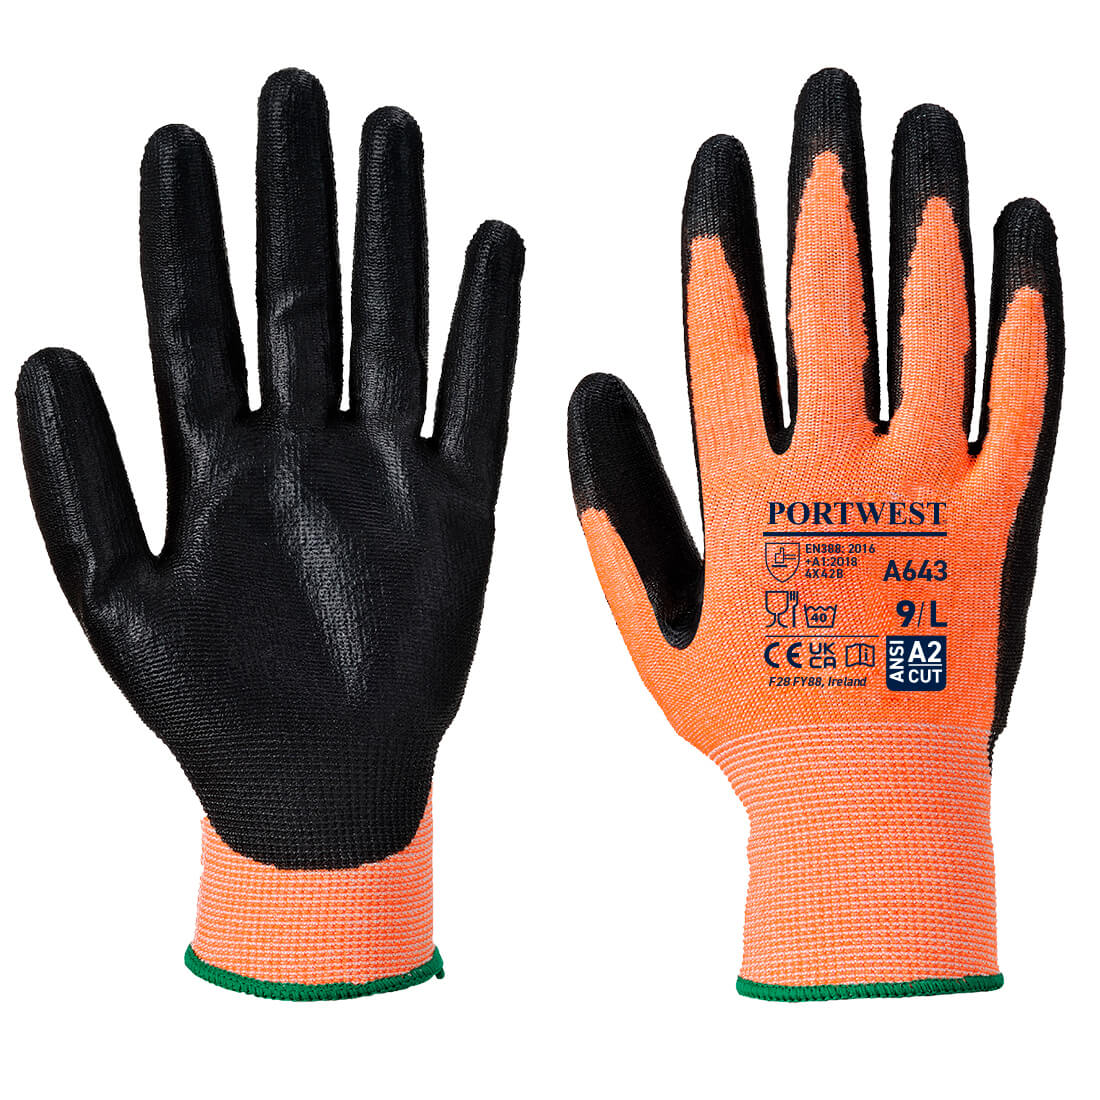 A665 Portwest® Amber Hi-Vis Cut Gloves with Nitrile Foam Palm Coating